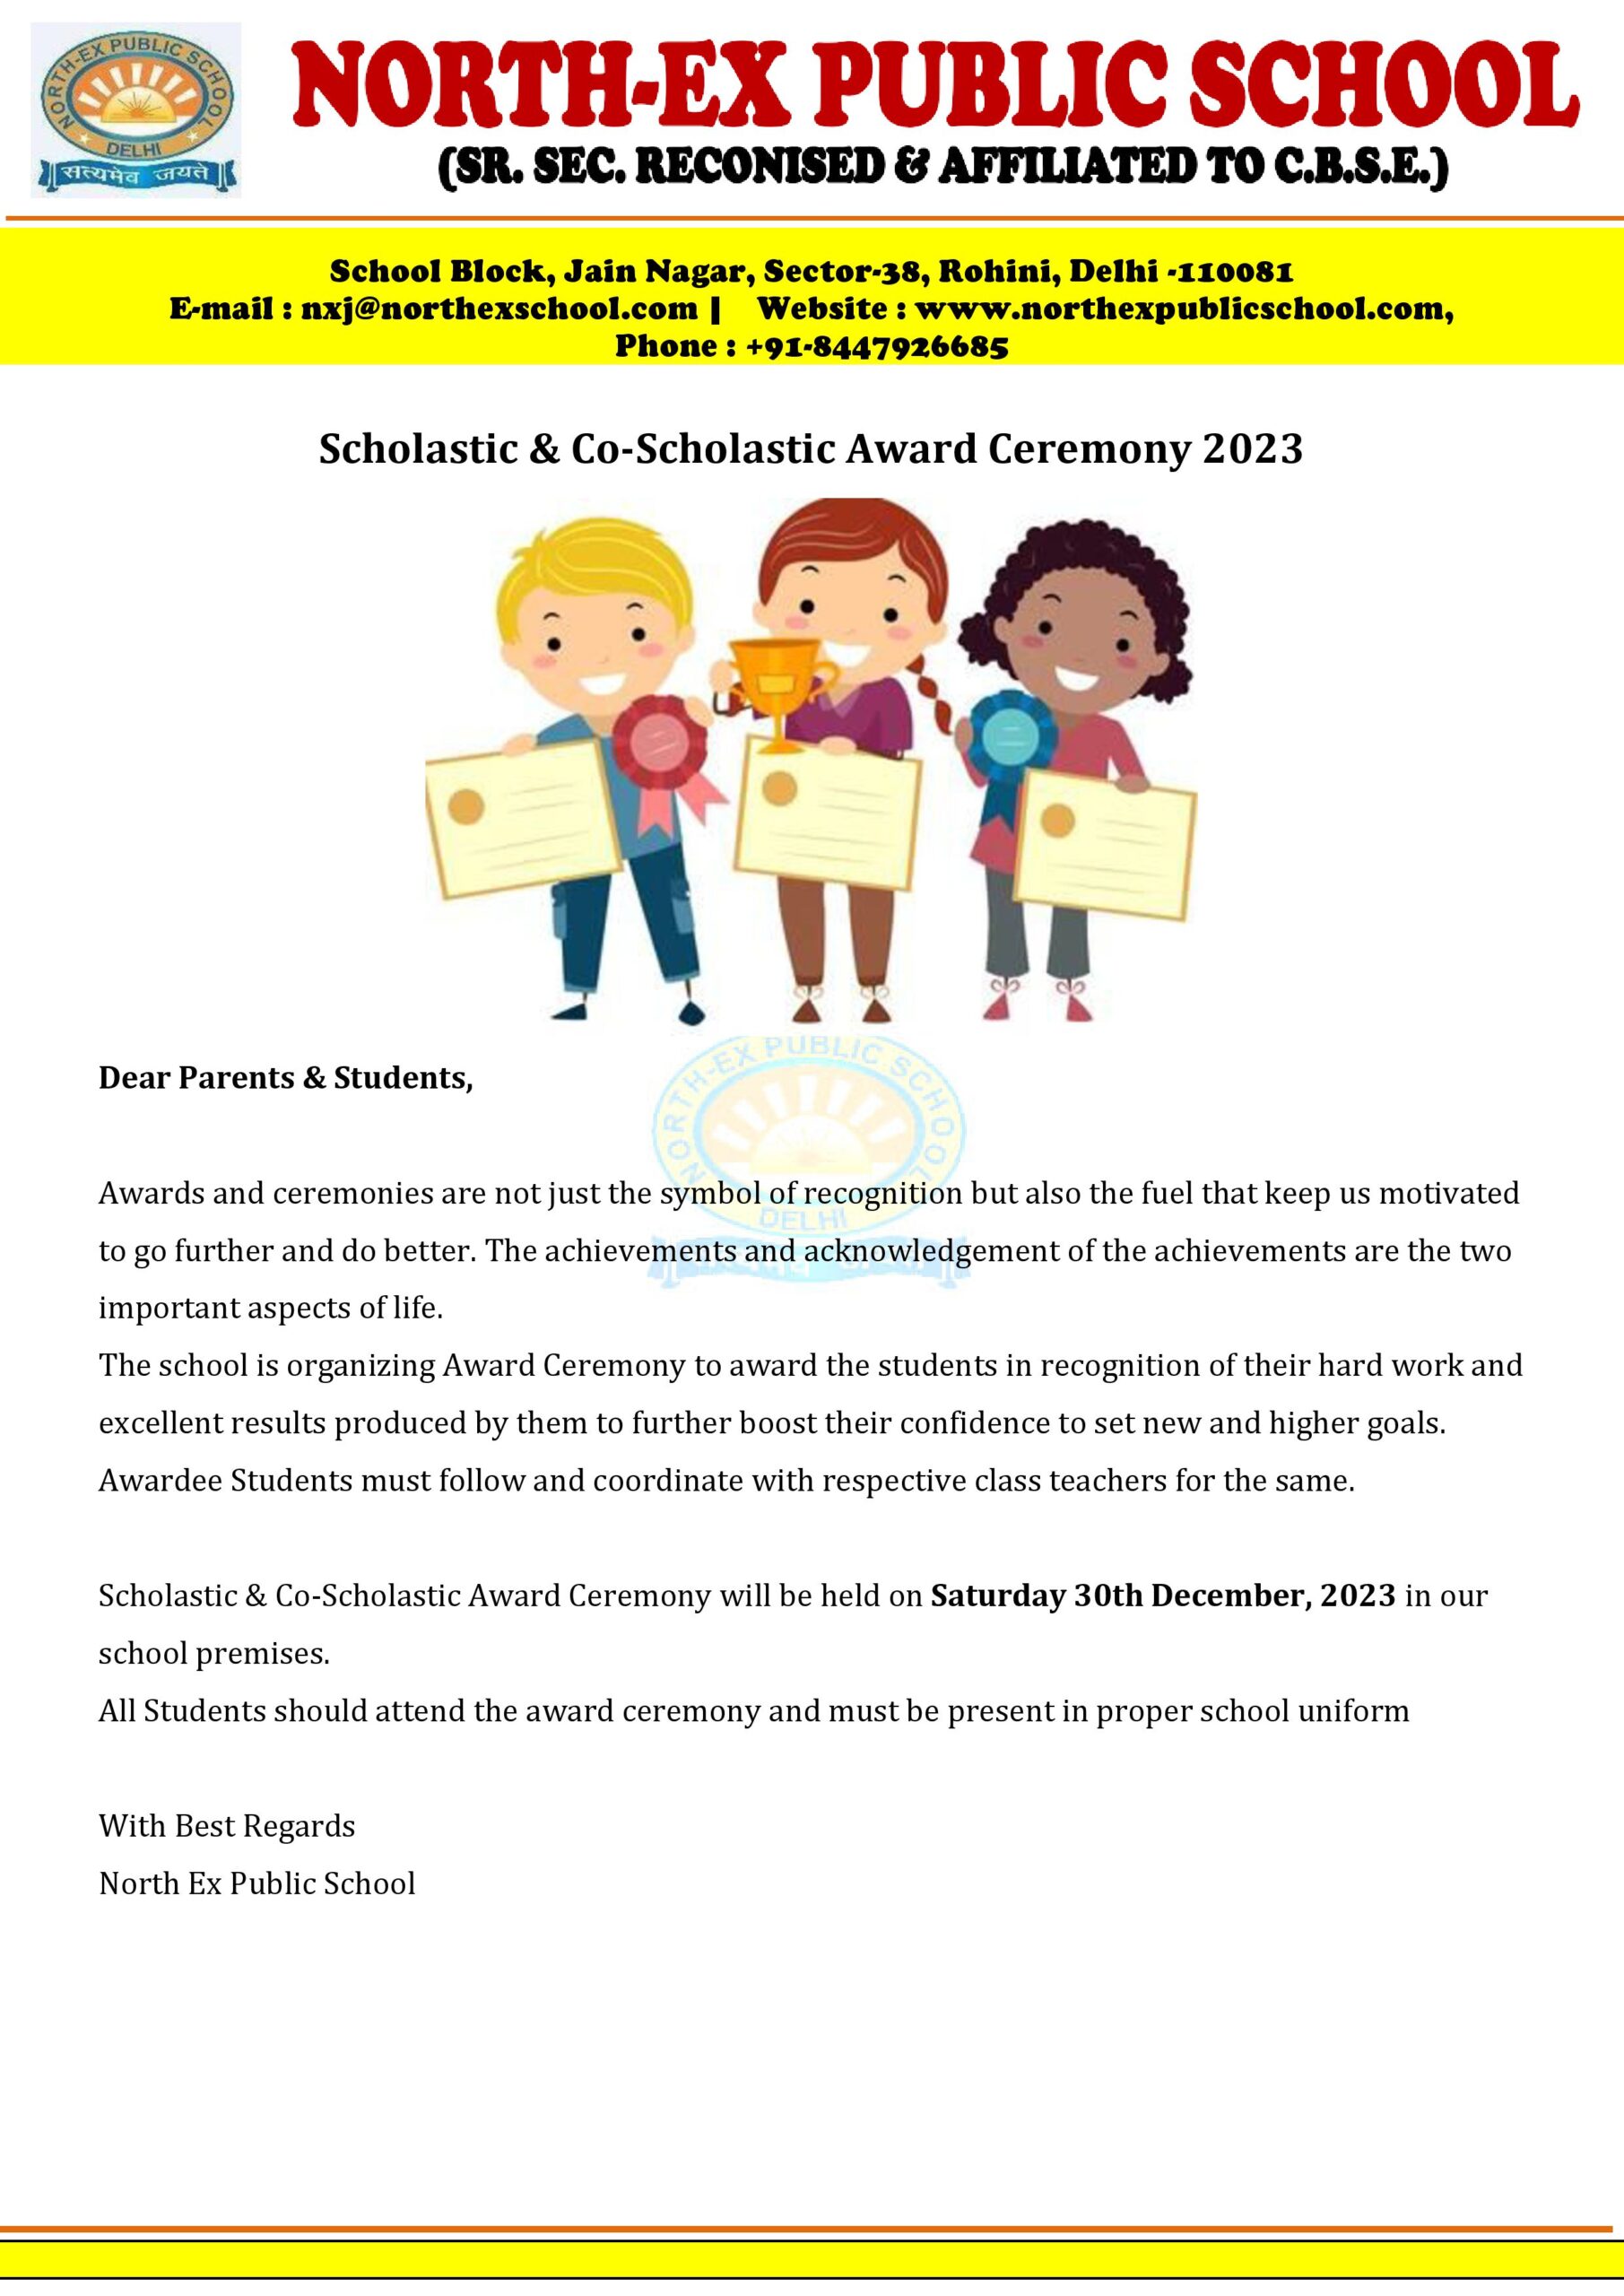 Scholastic & Co-Scholastic Award Ceremony 2023